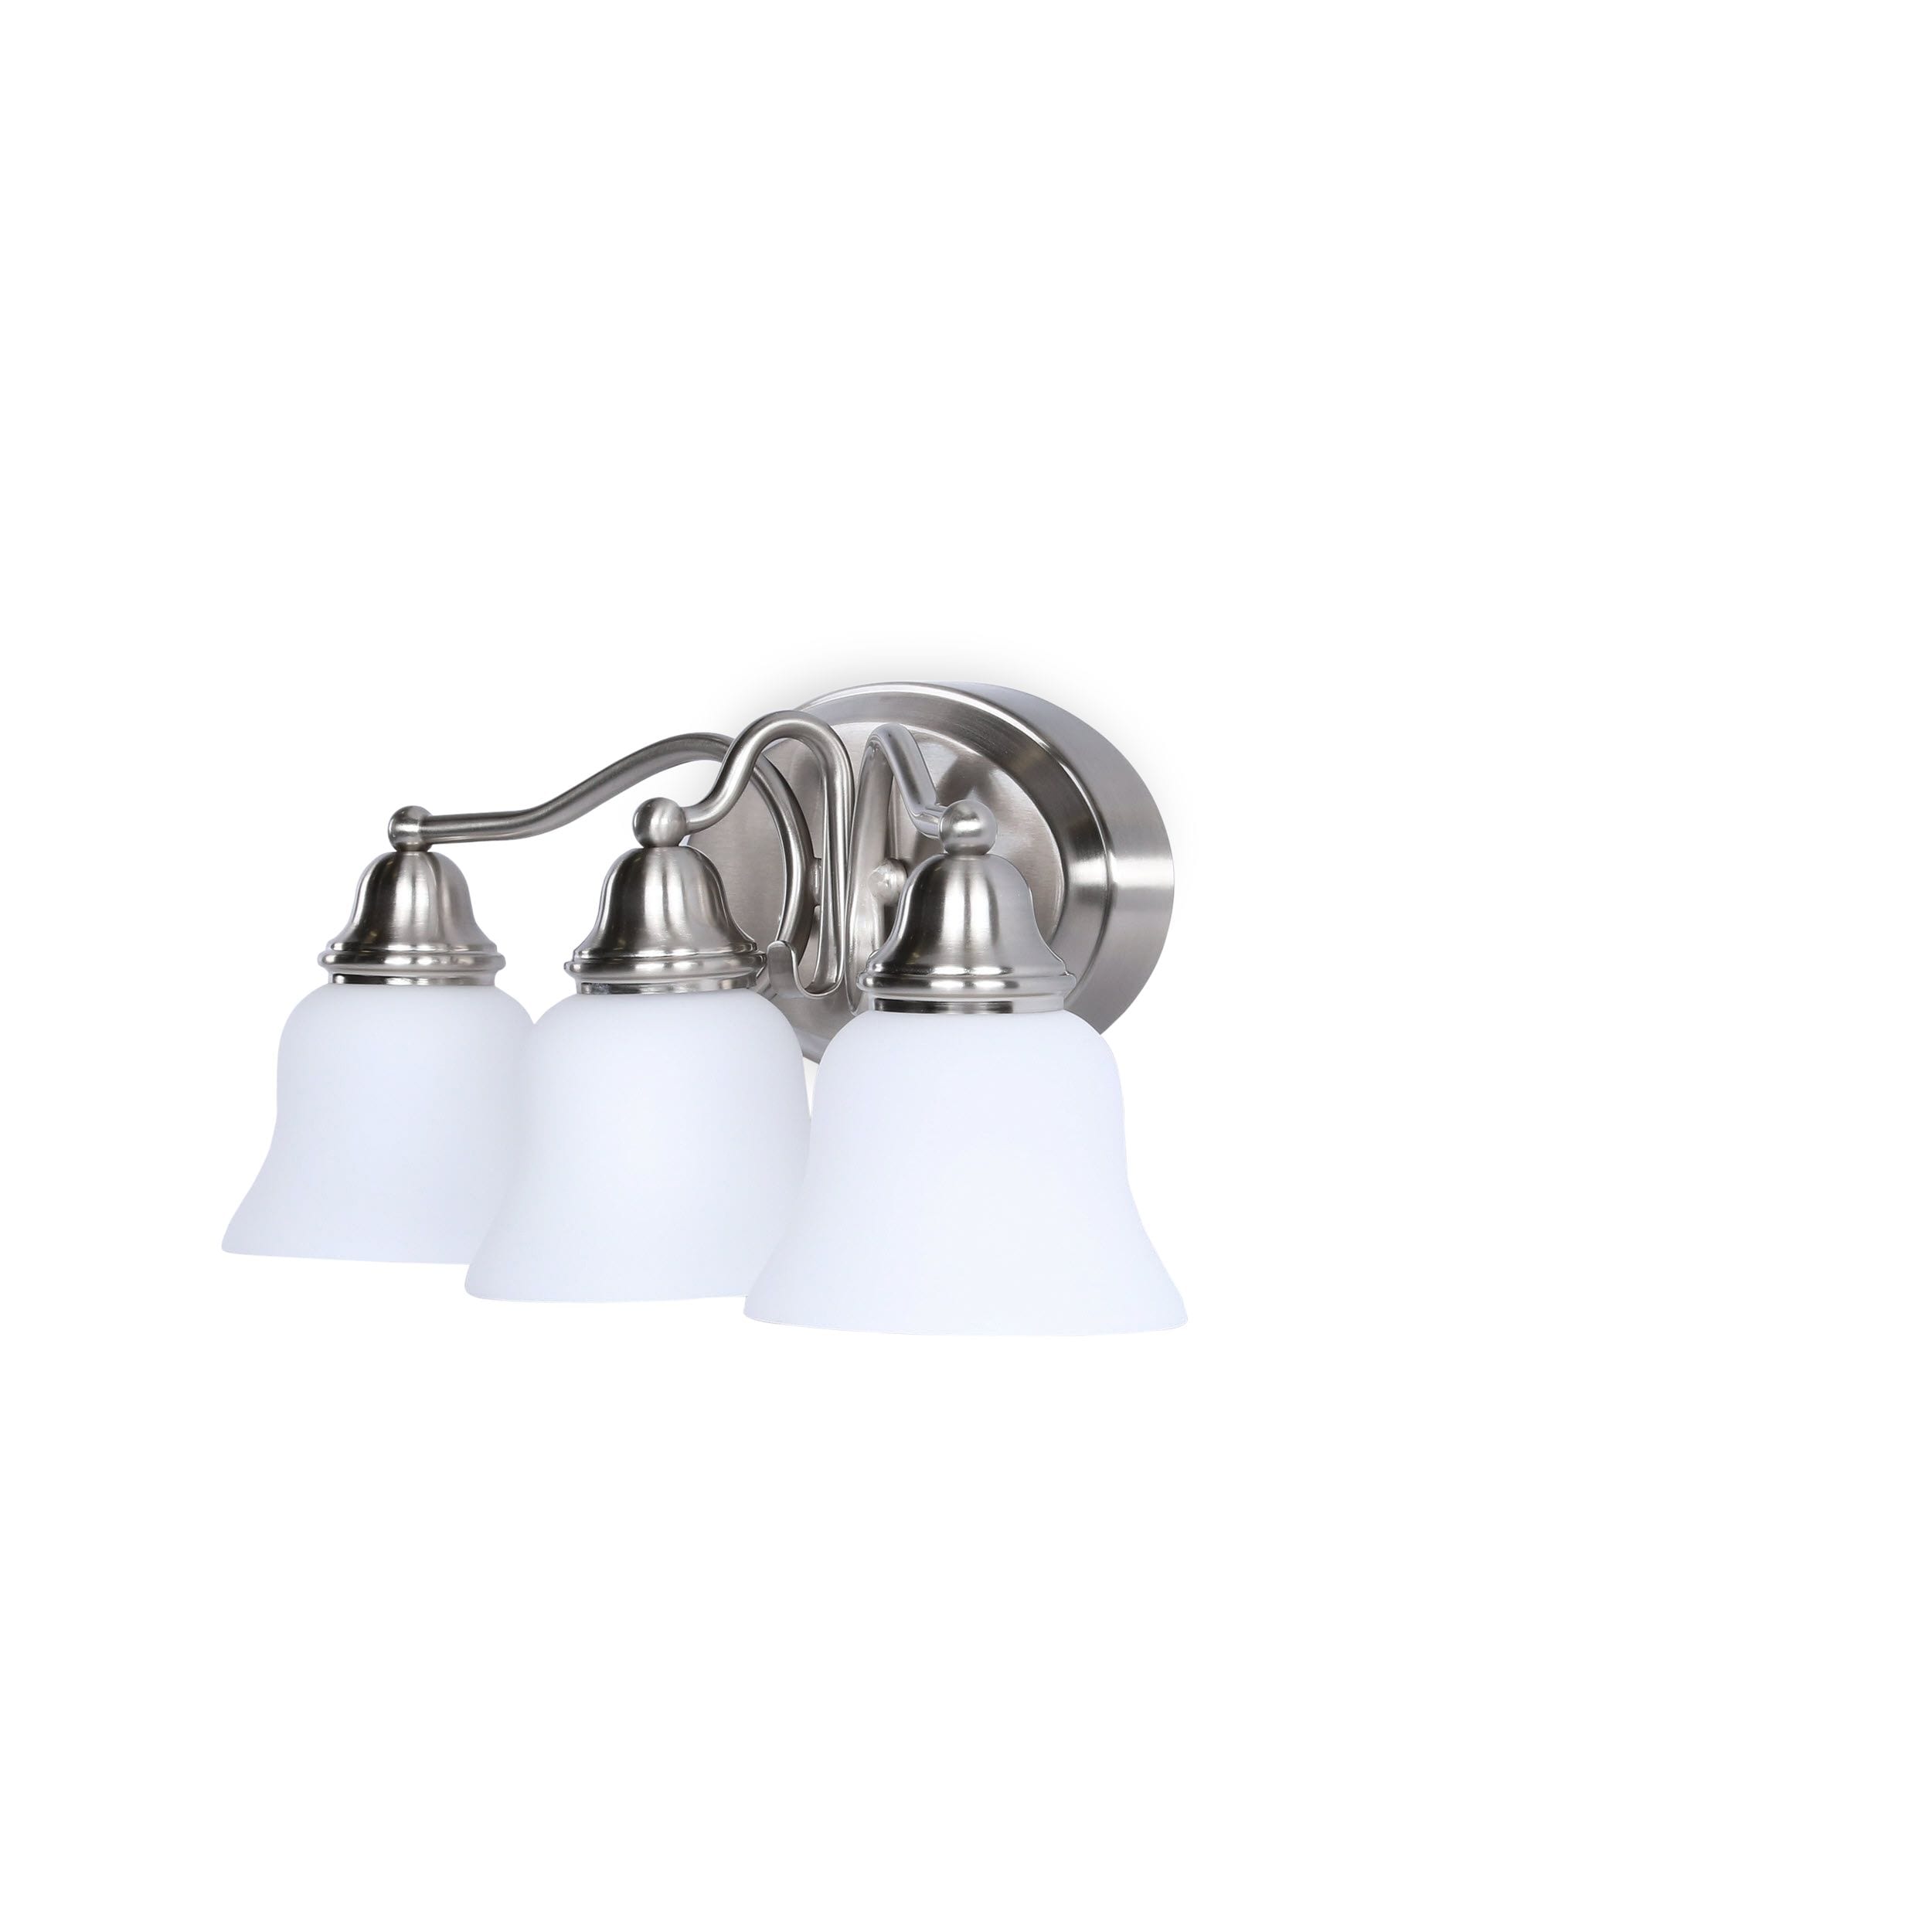 NEW Details about   Kichler Lighting Satin Nickel 3-Light Contemporary LED Track Light 